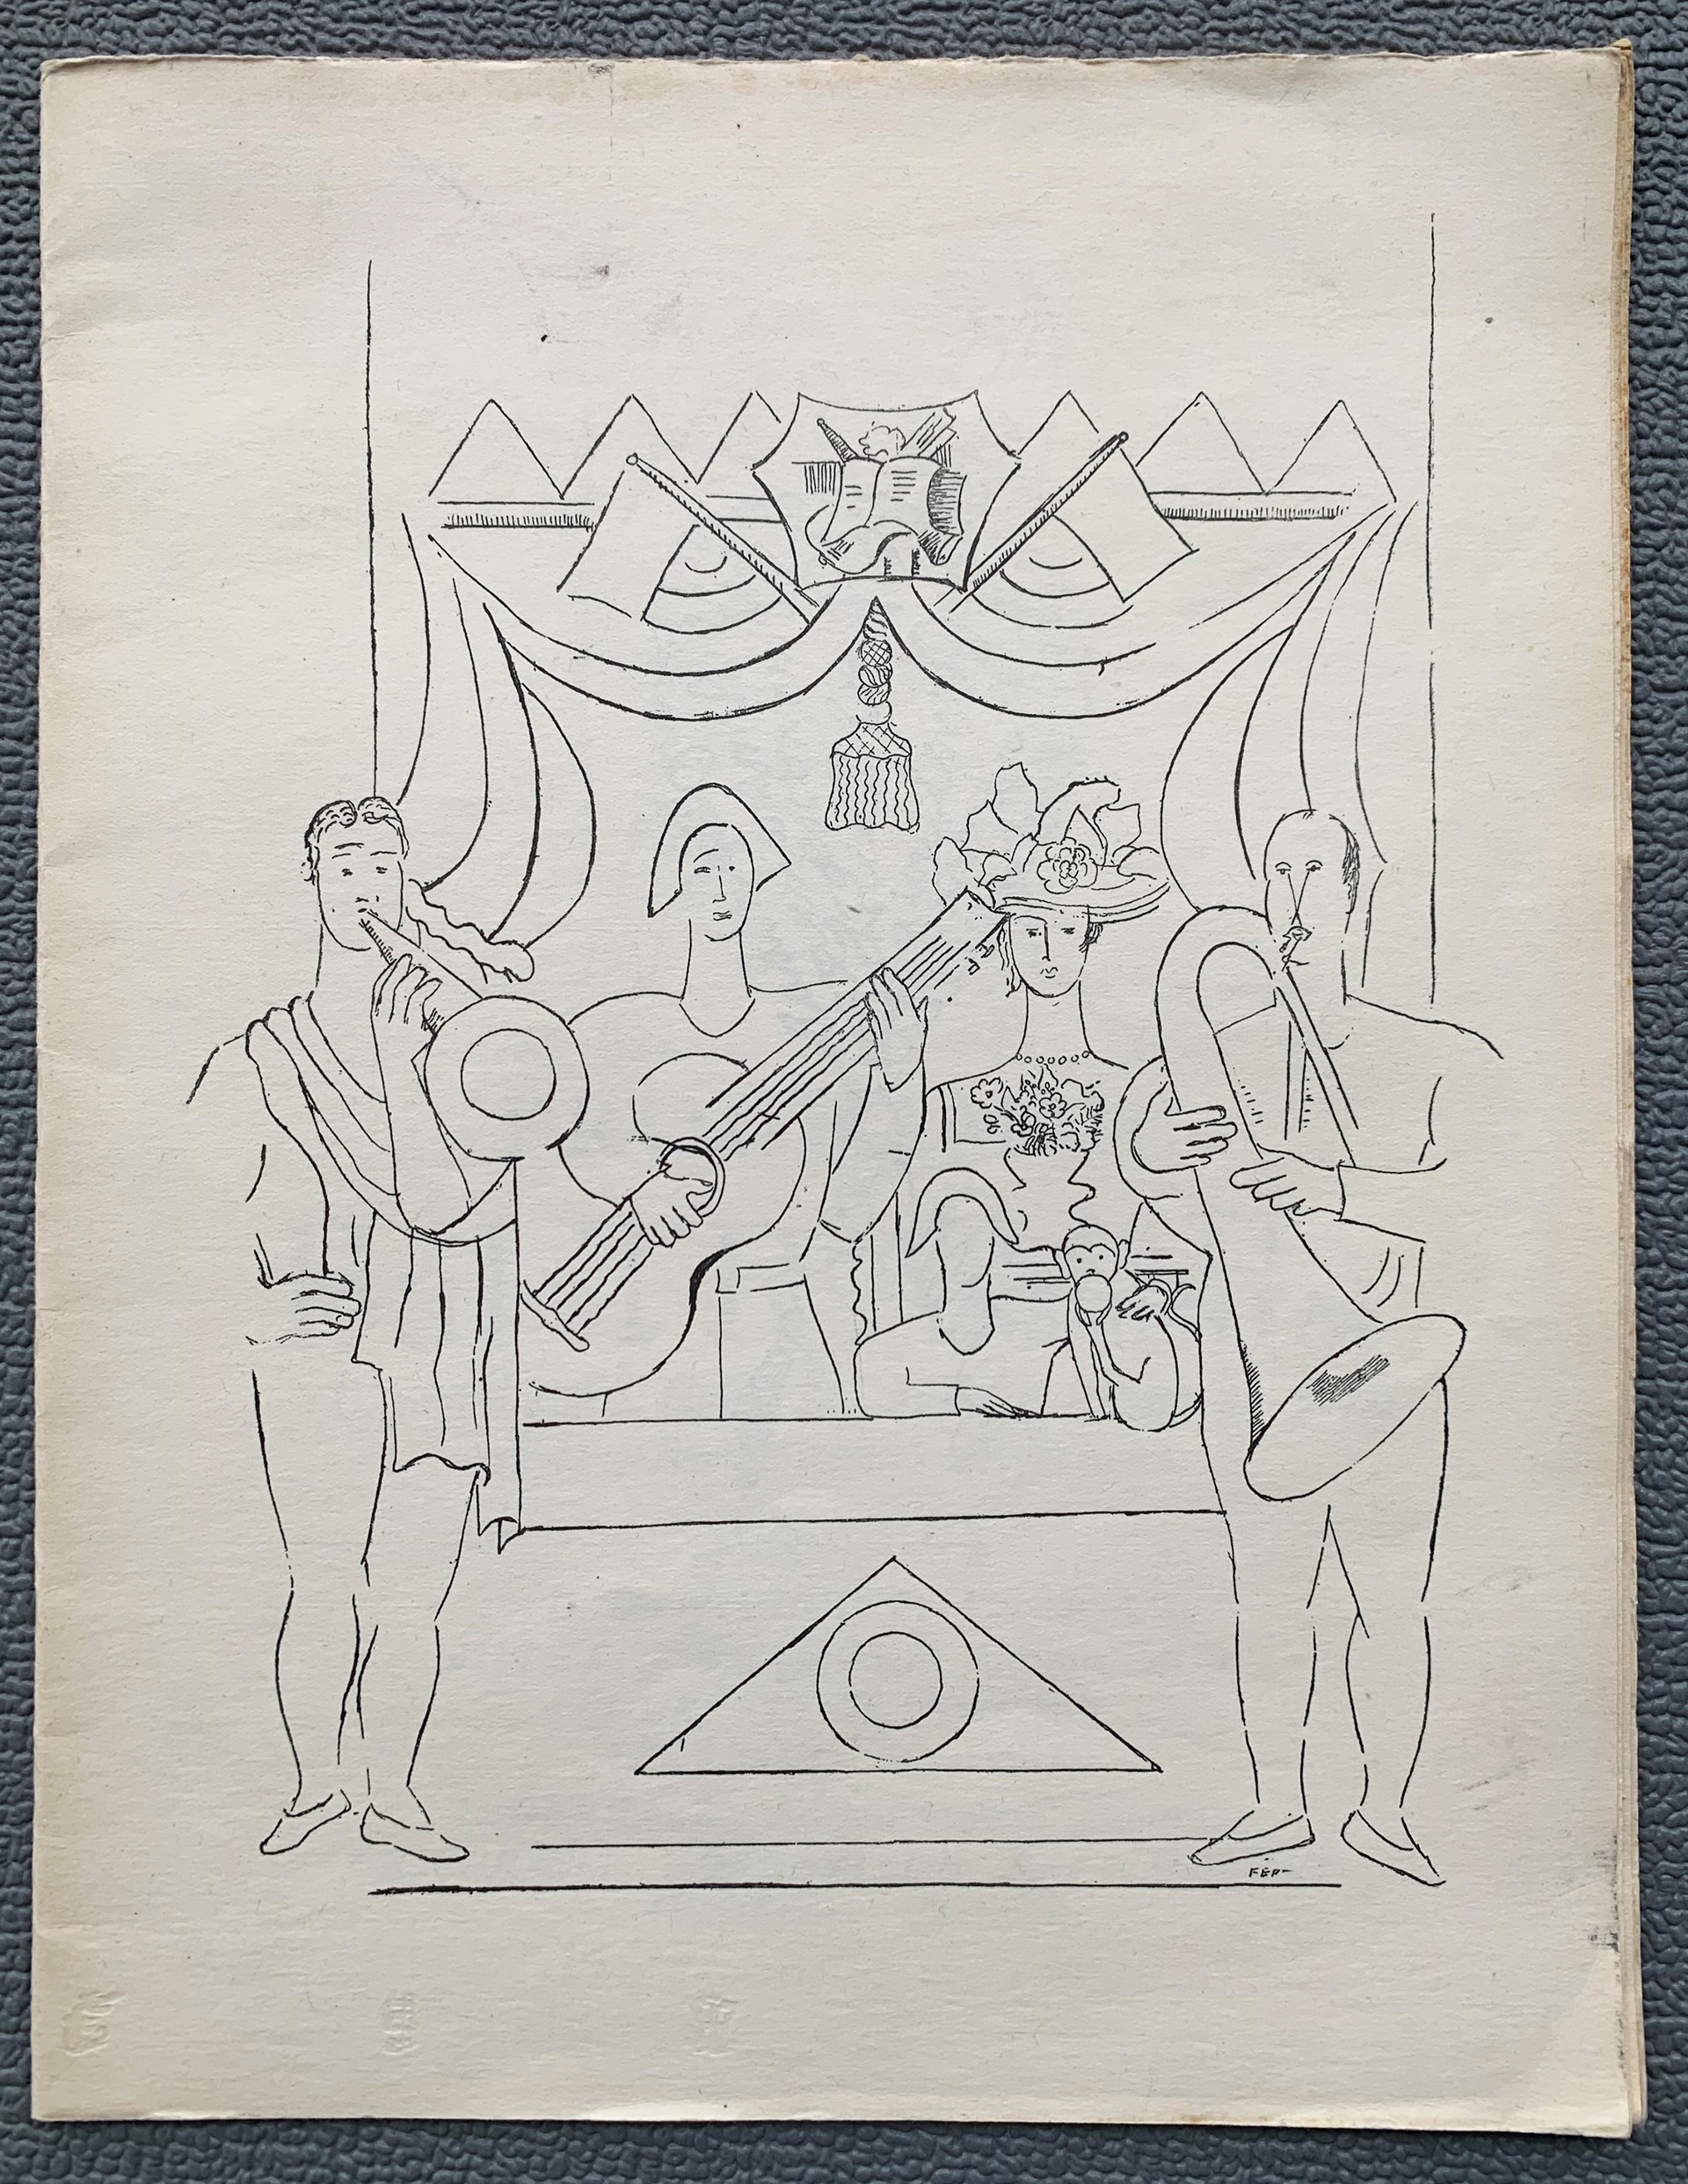 Bal des Artistes travesti transmental, 1923